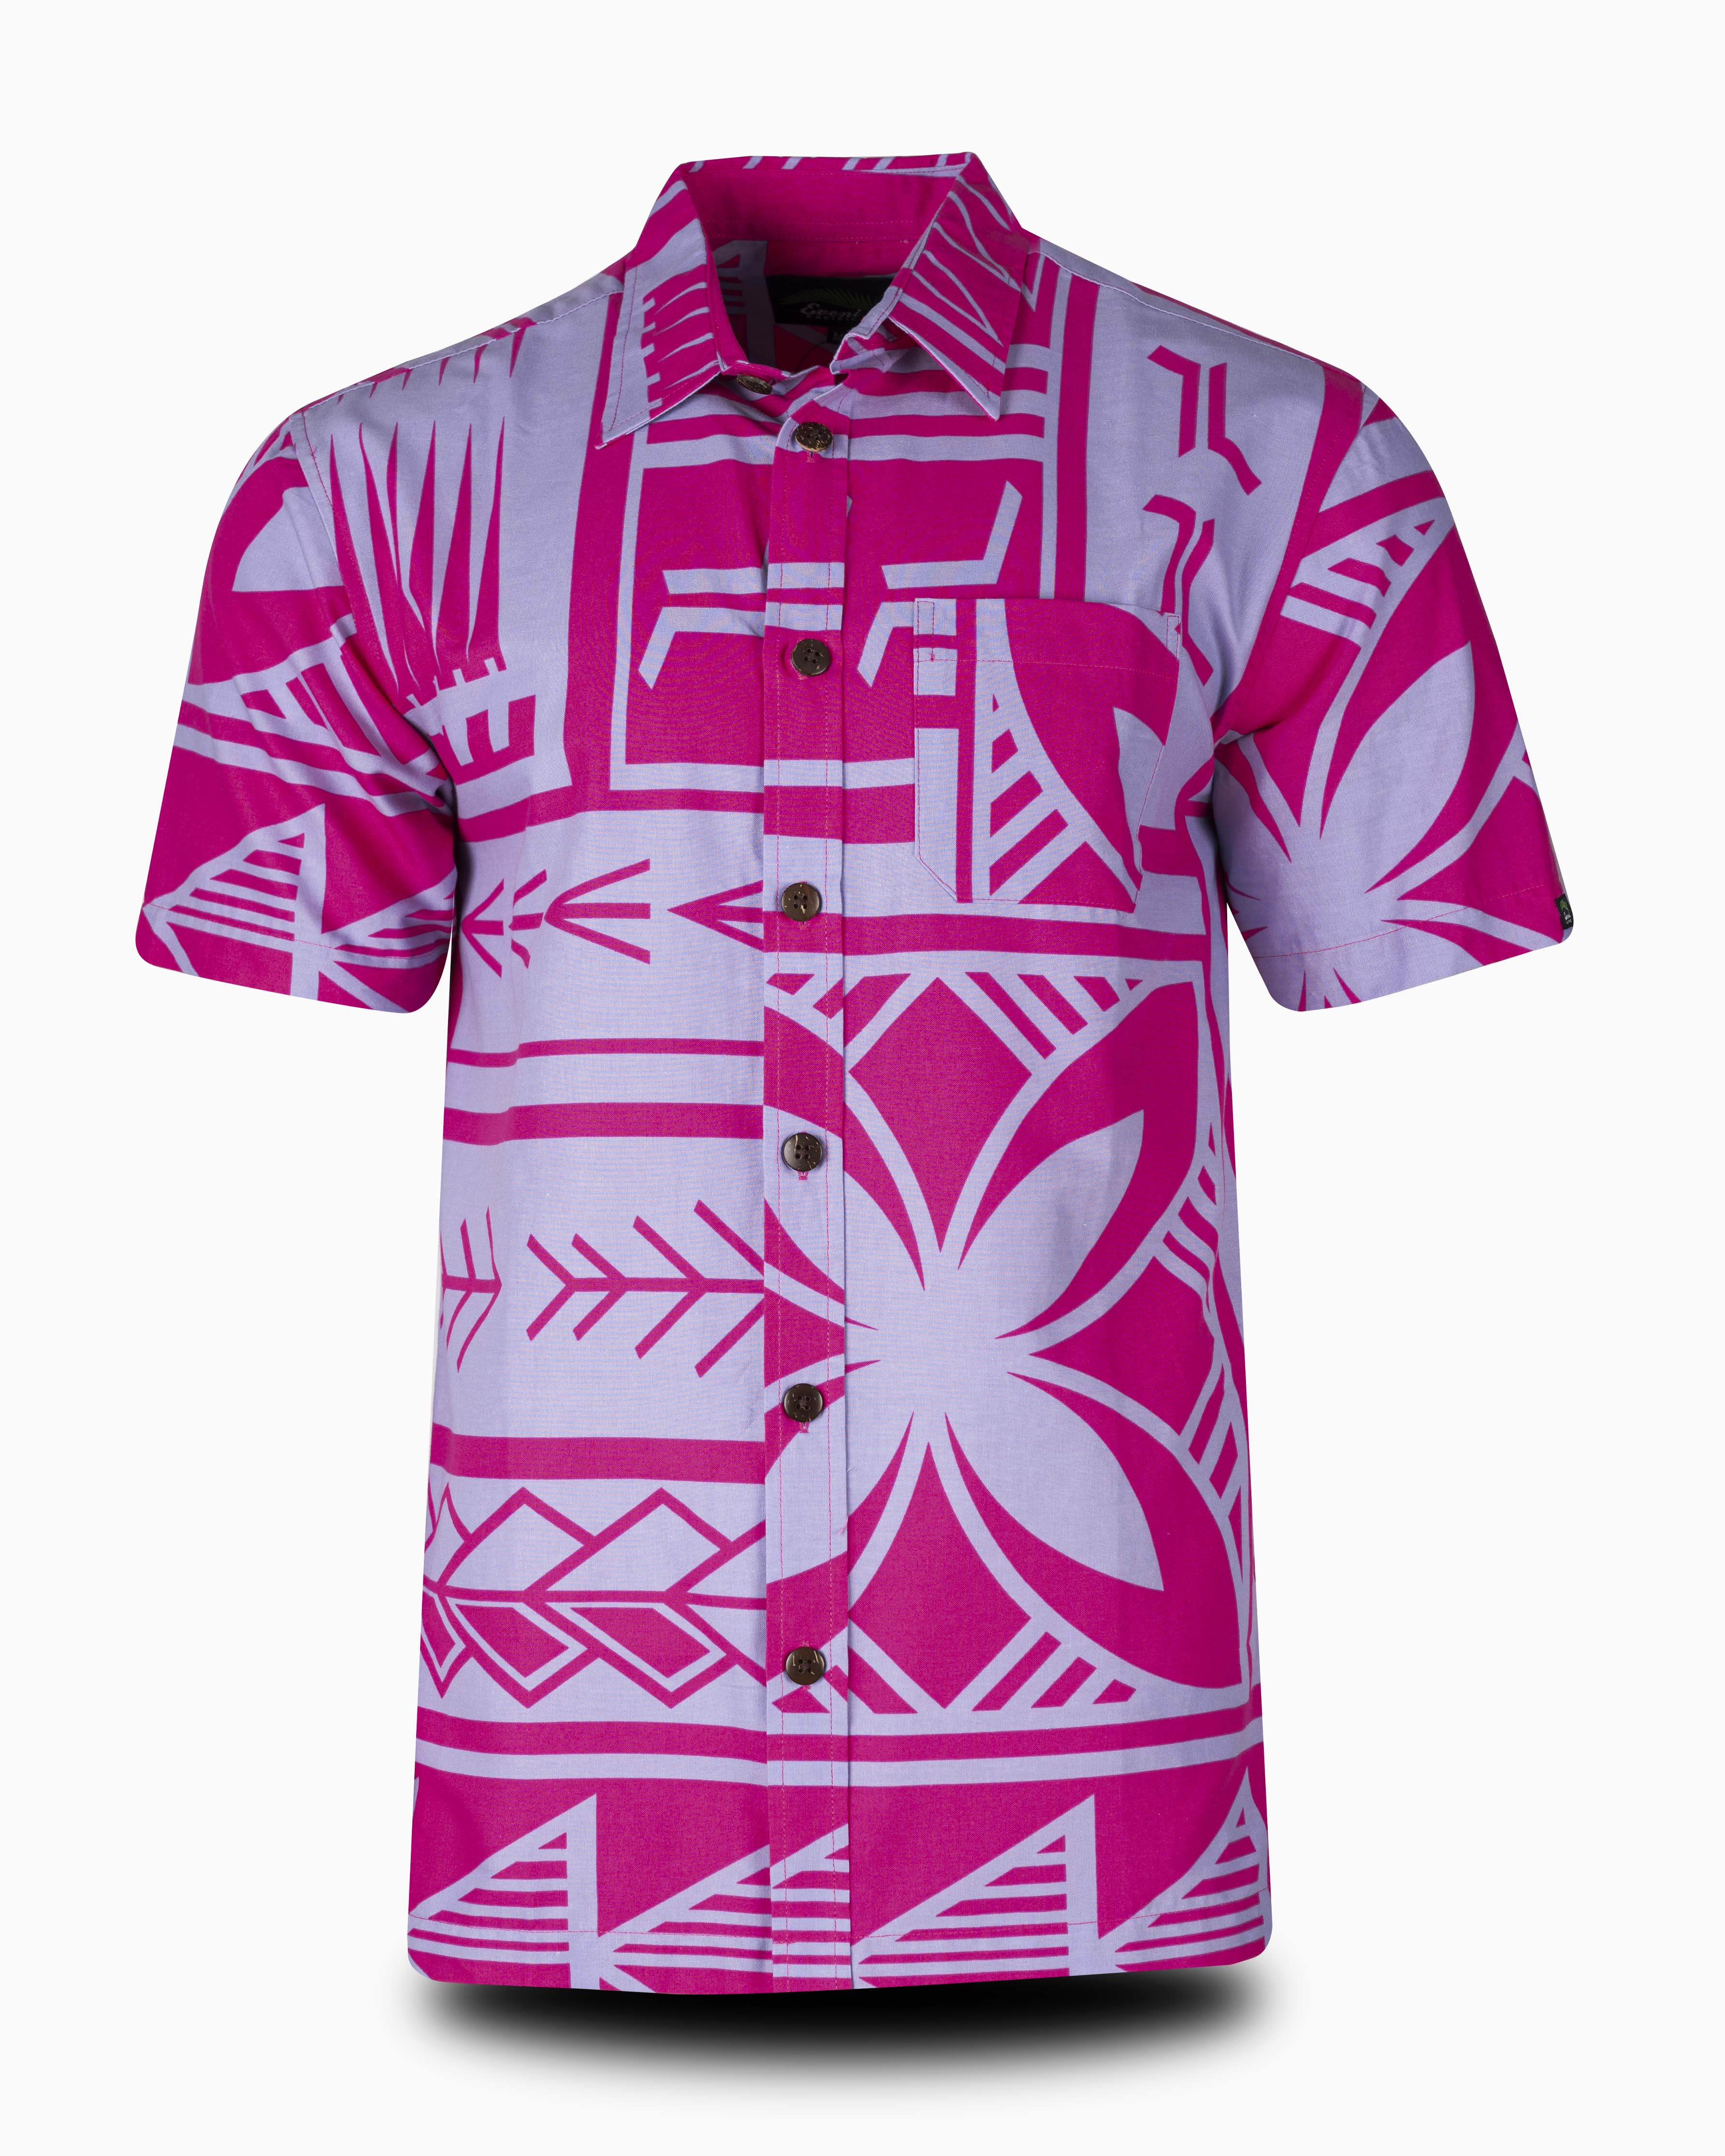 Eveni Pacific Men's Classic Shirt - FULTON PINK